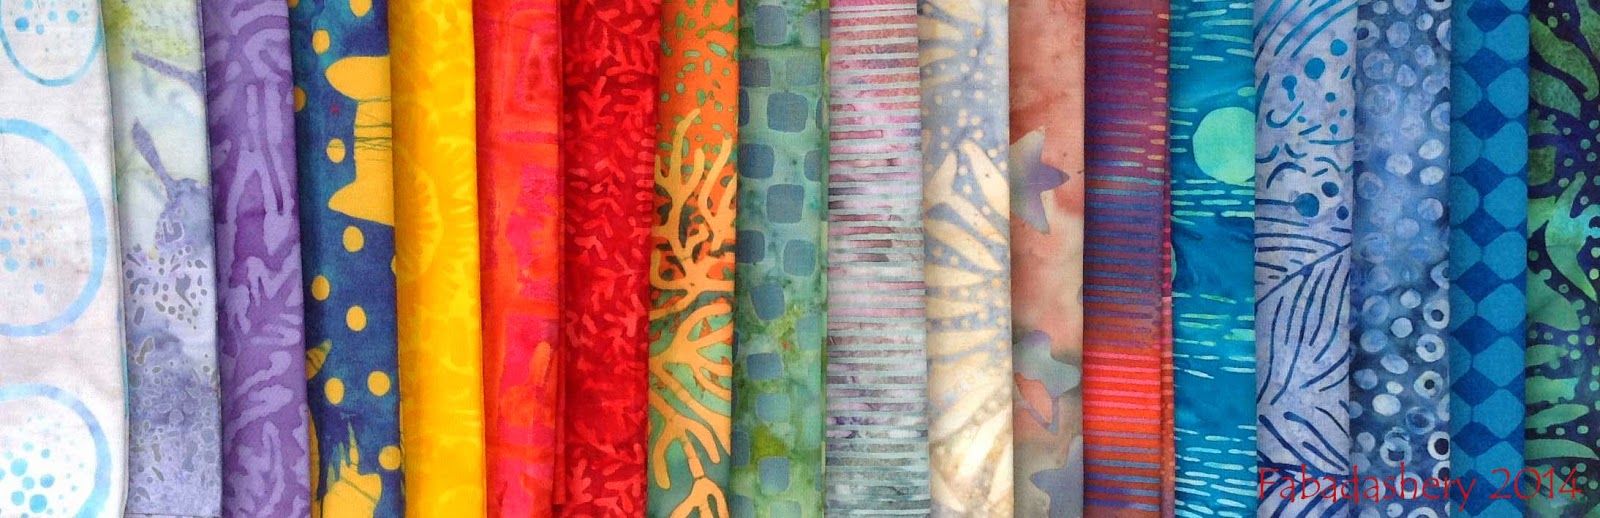 Giveaway Prize - 18 FQs of Batik Fabric